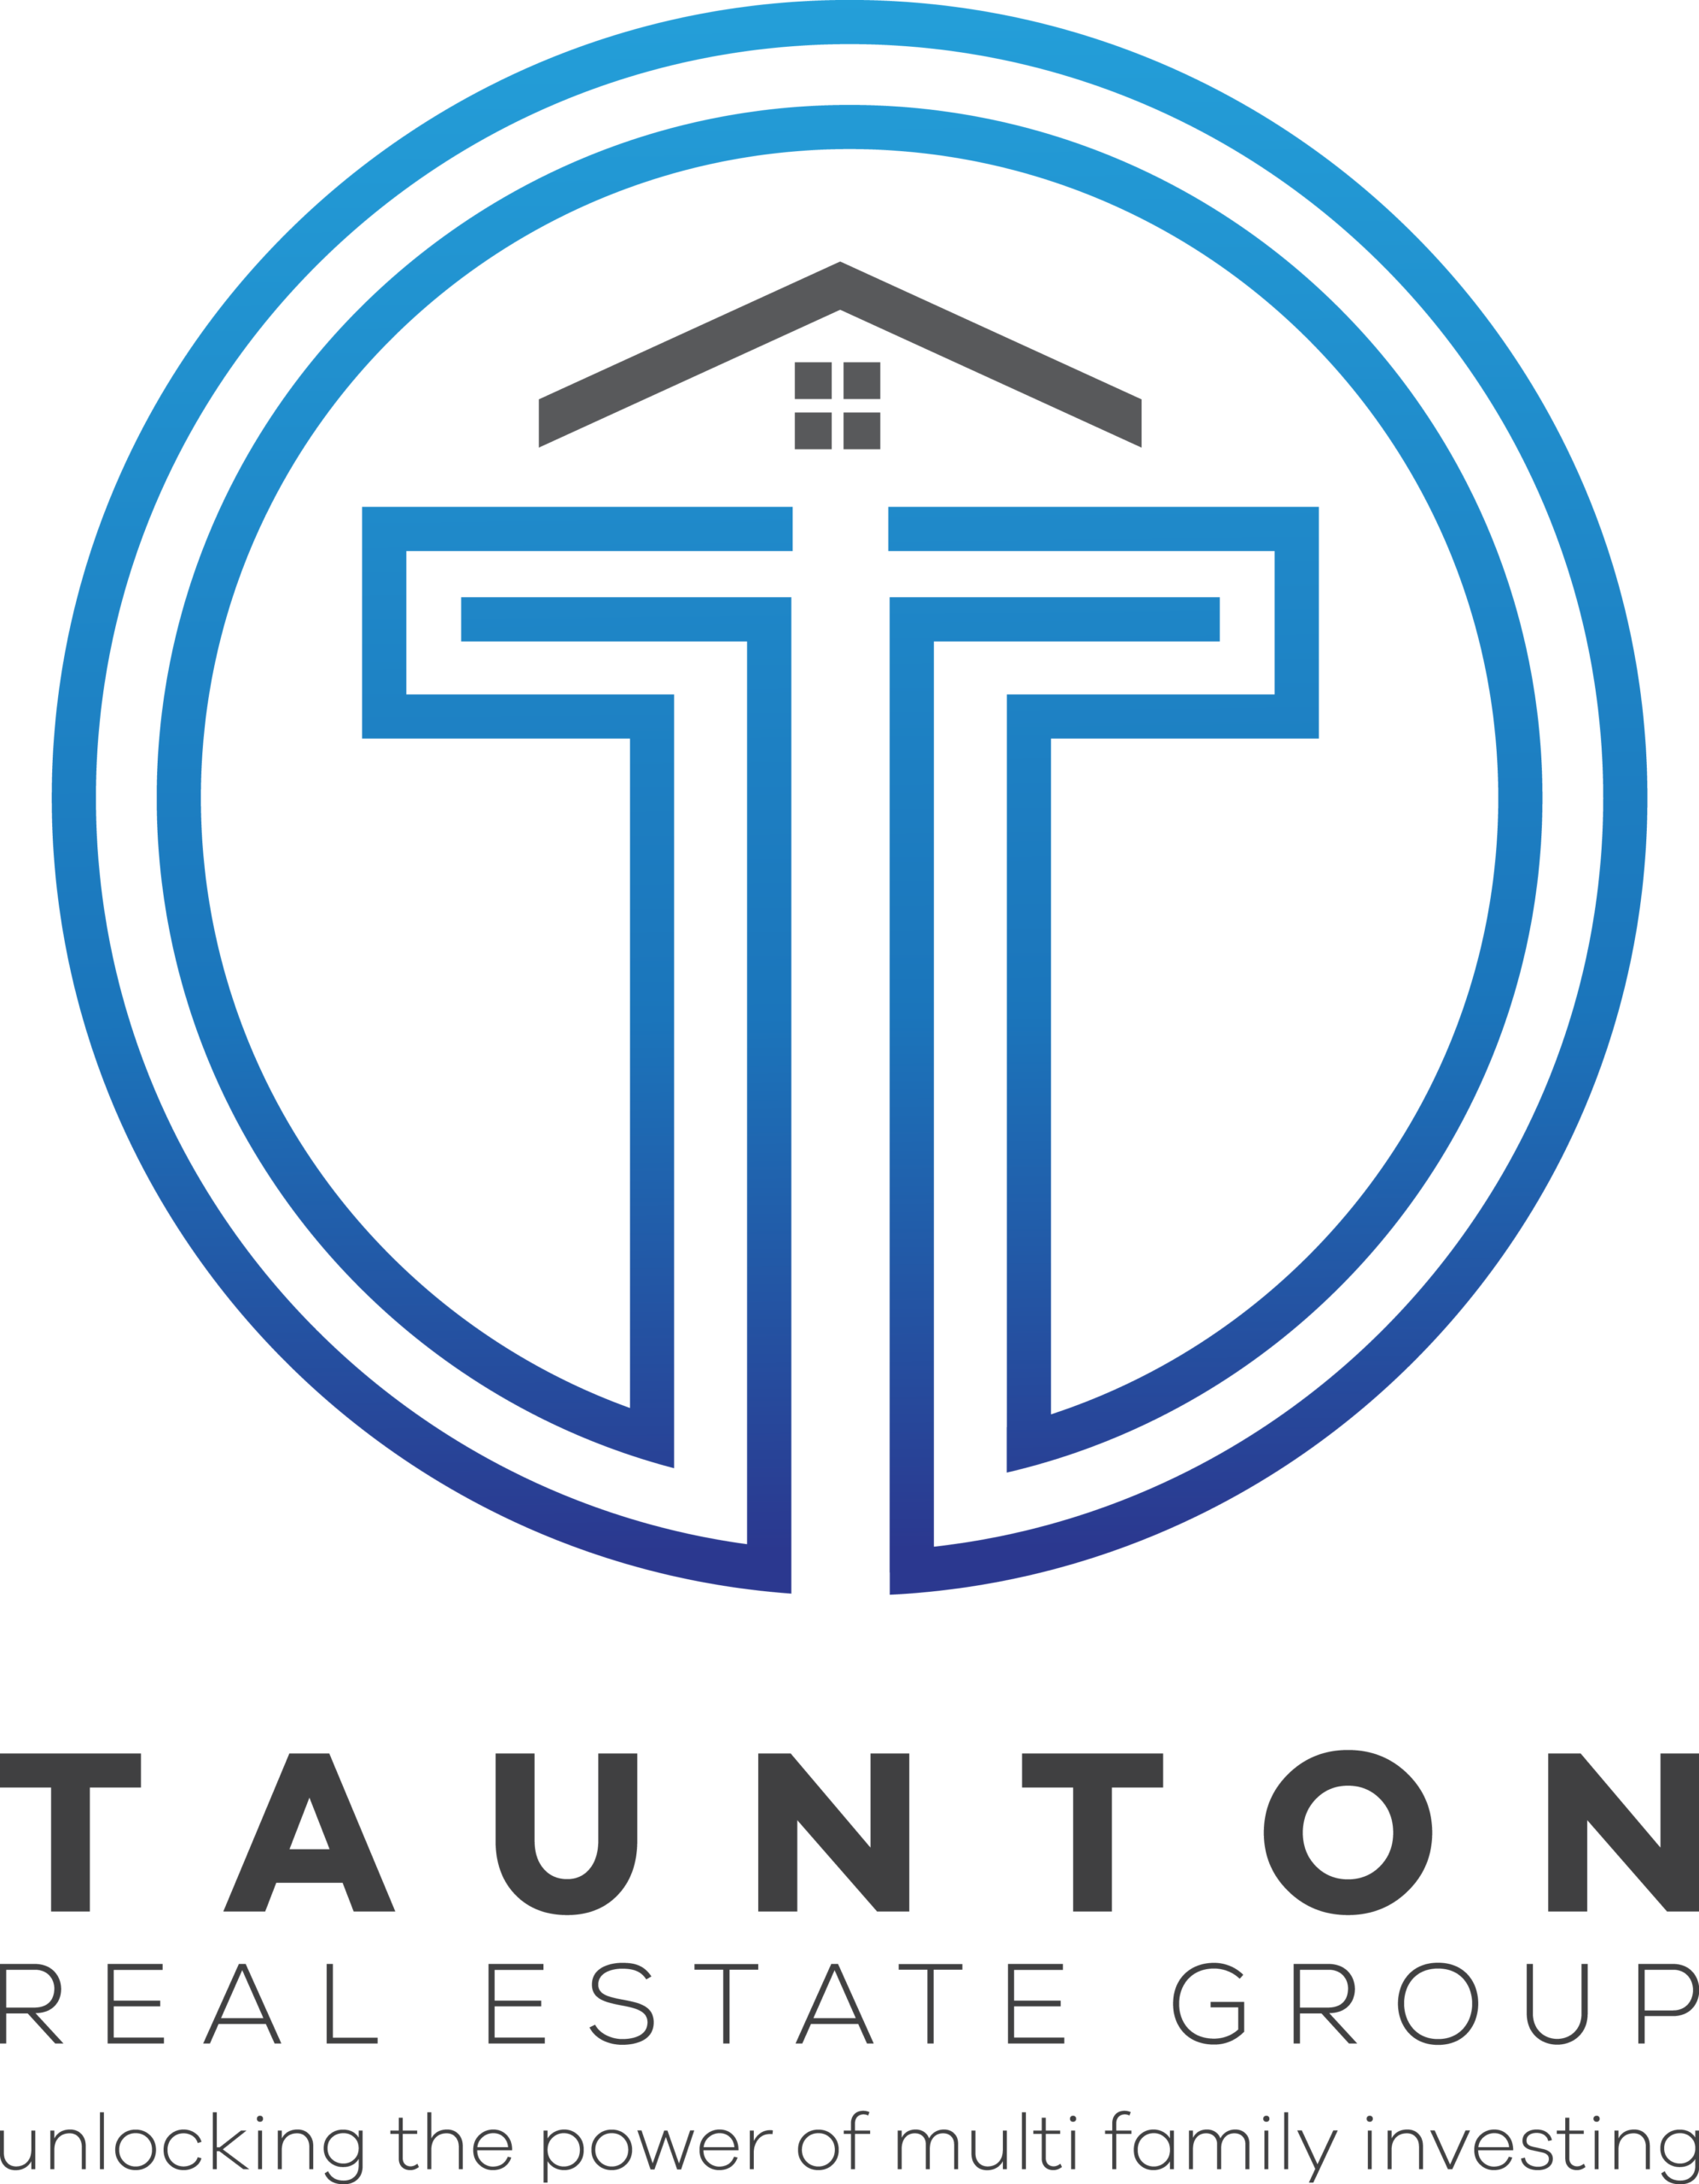 The Taunton Real Estate Group